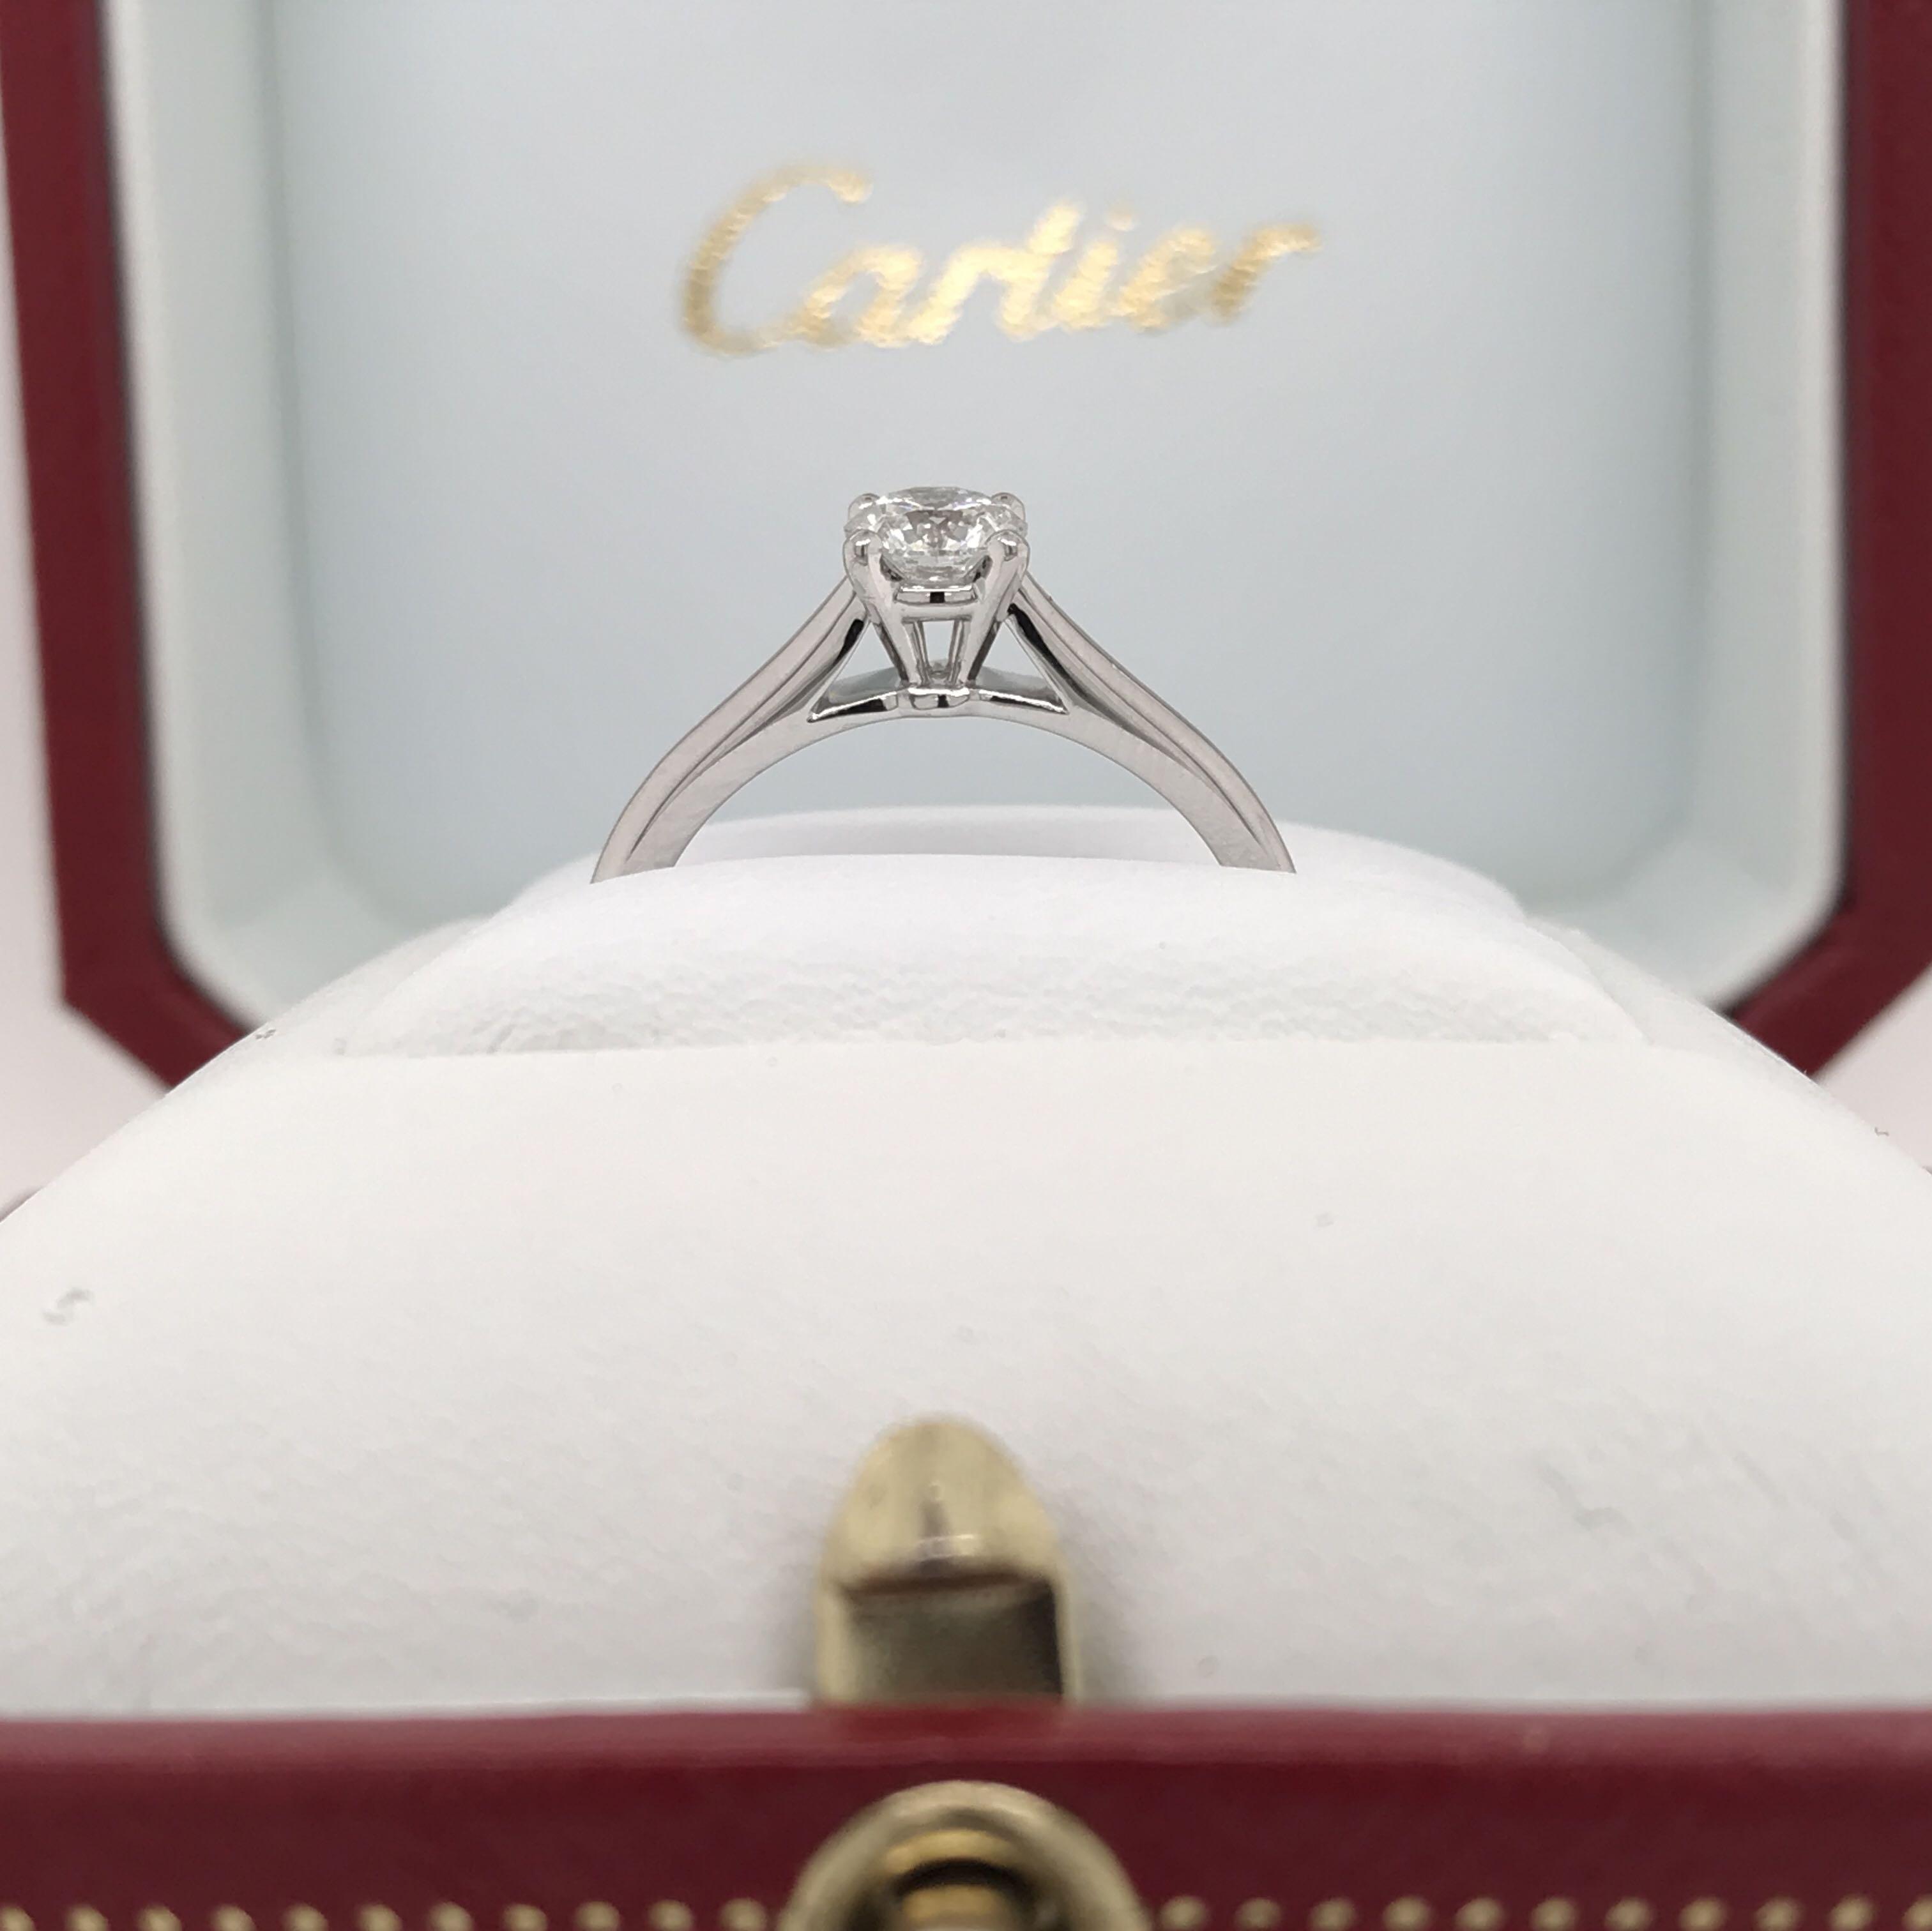 Cartier 1895 Diamond Ring - 0.40ct F 